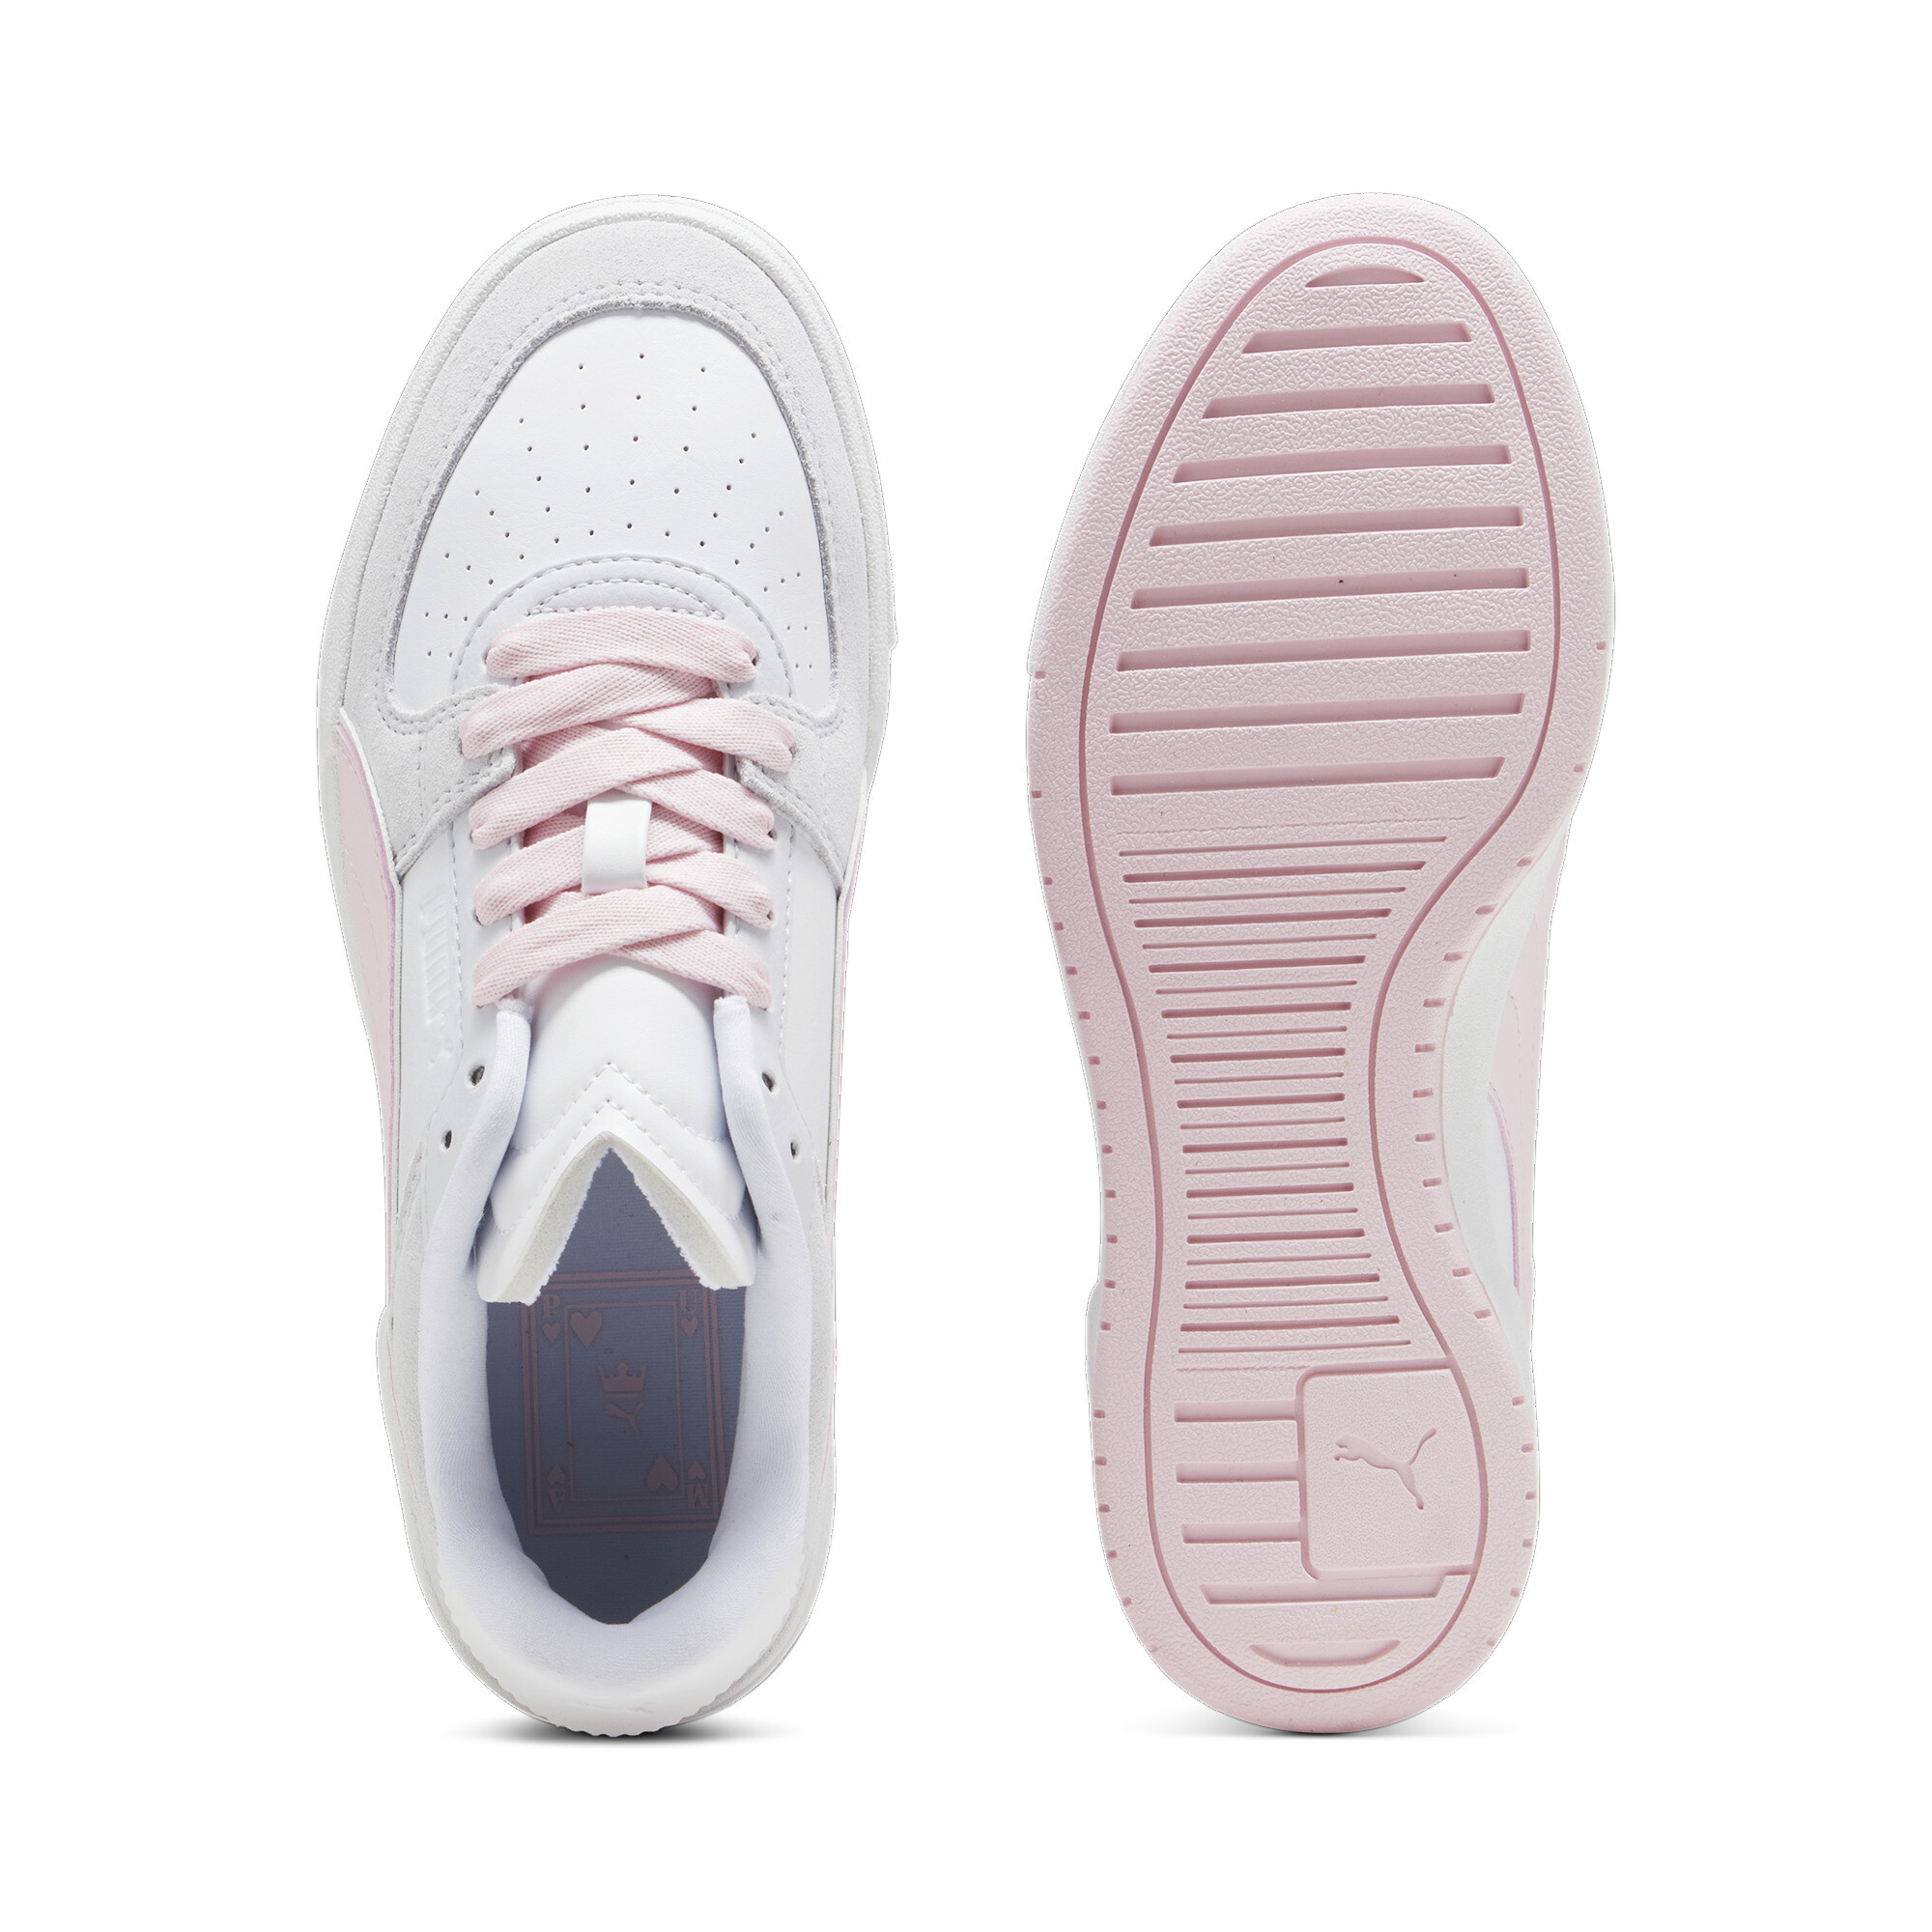 Women's PUMA CA Pro Queen Of Hearts Sneakers In White/Pink, Size EU 37.5